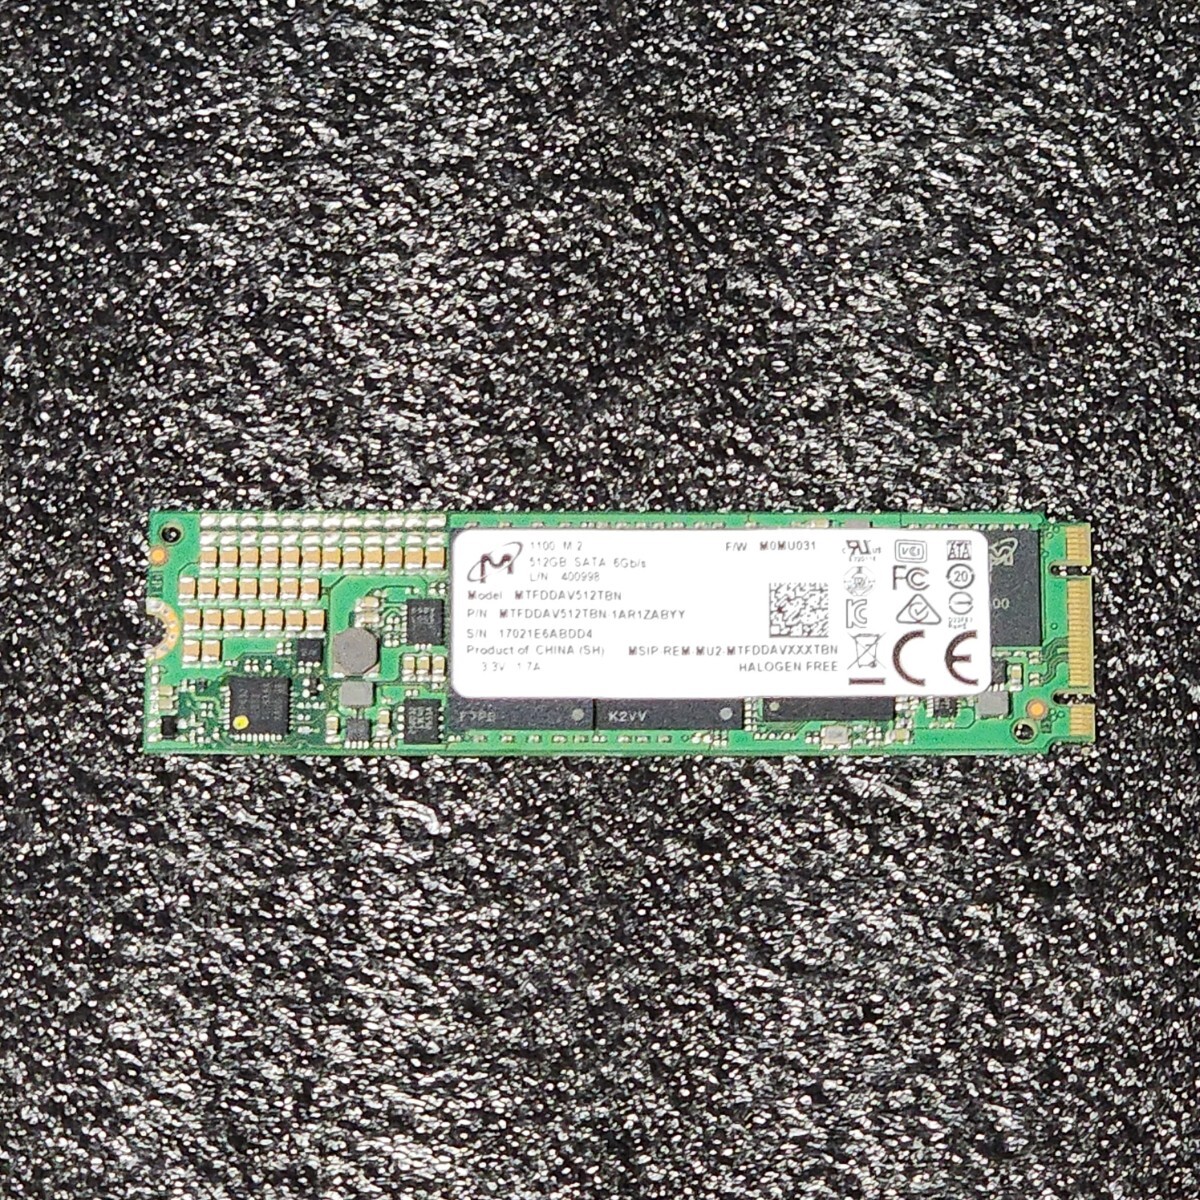 Micron 1100 MTFDDAV512TBN 512GB SATA SSD フォーマット済み PCパーツ M.2 2280 動作確認済み 480GB 500GB